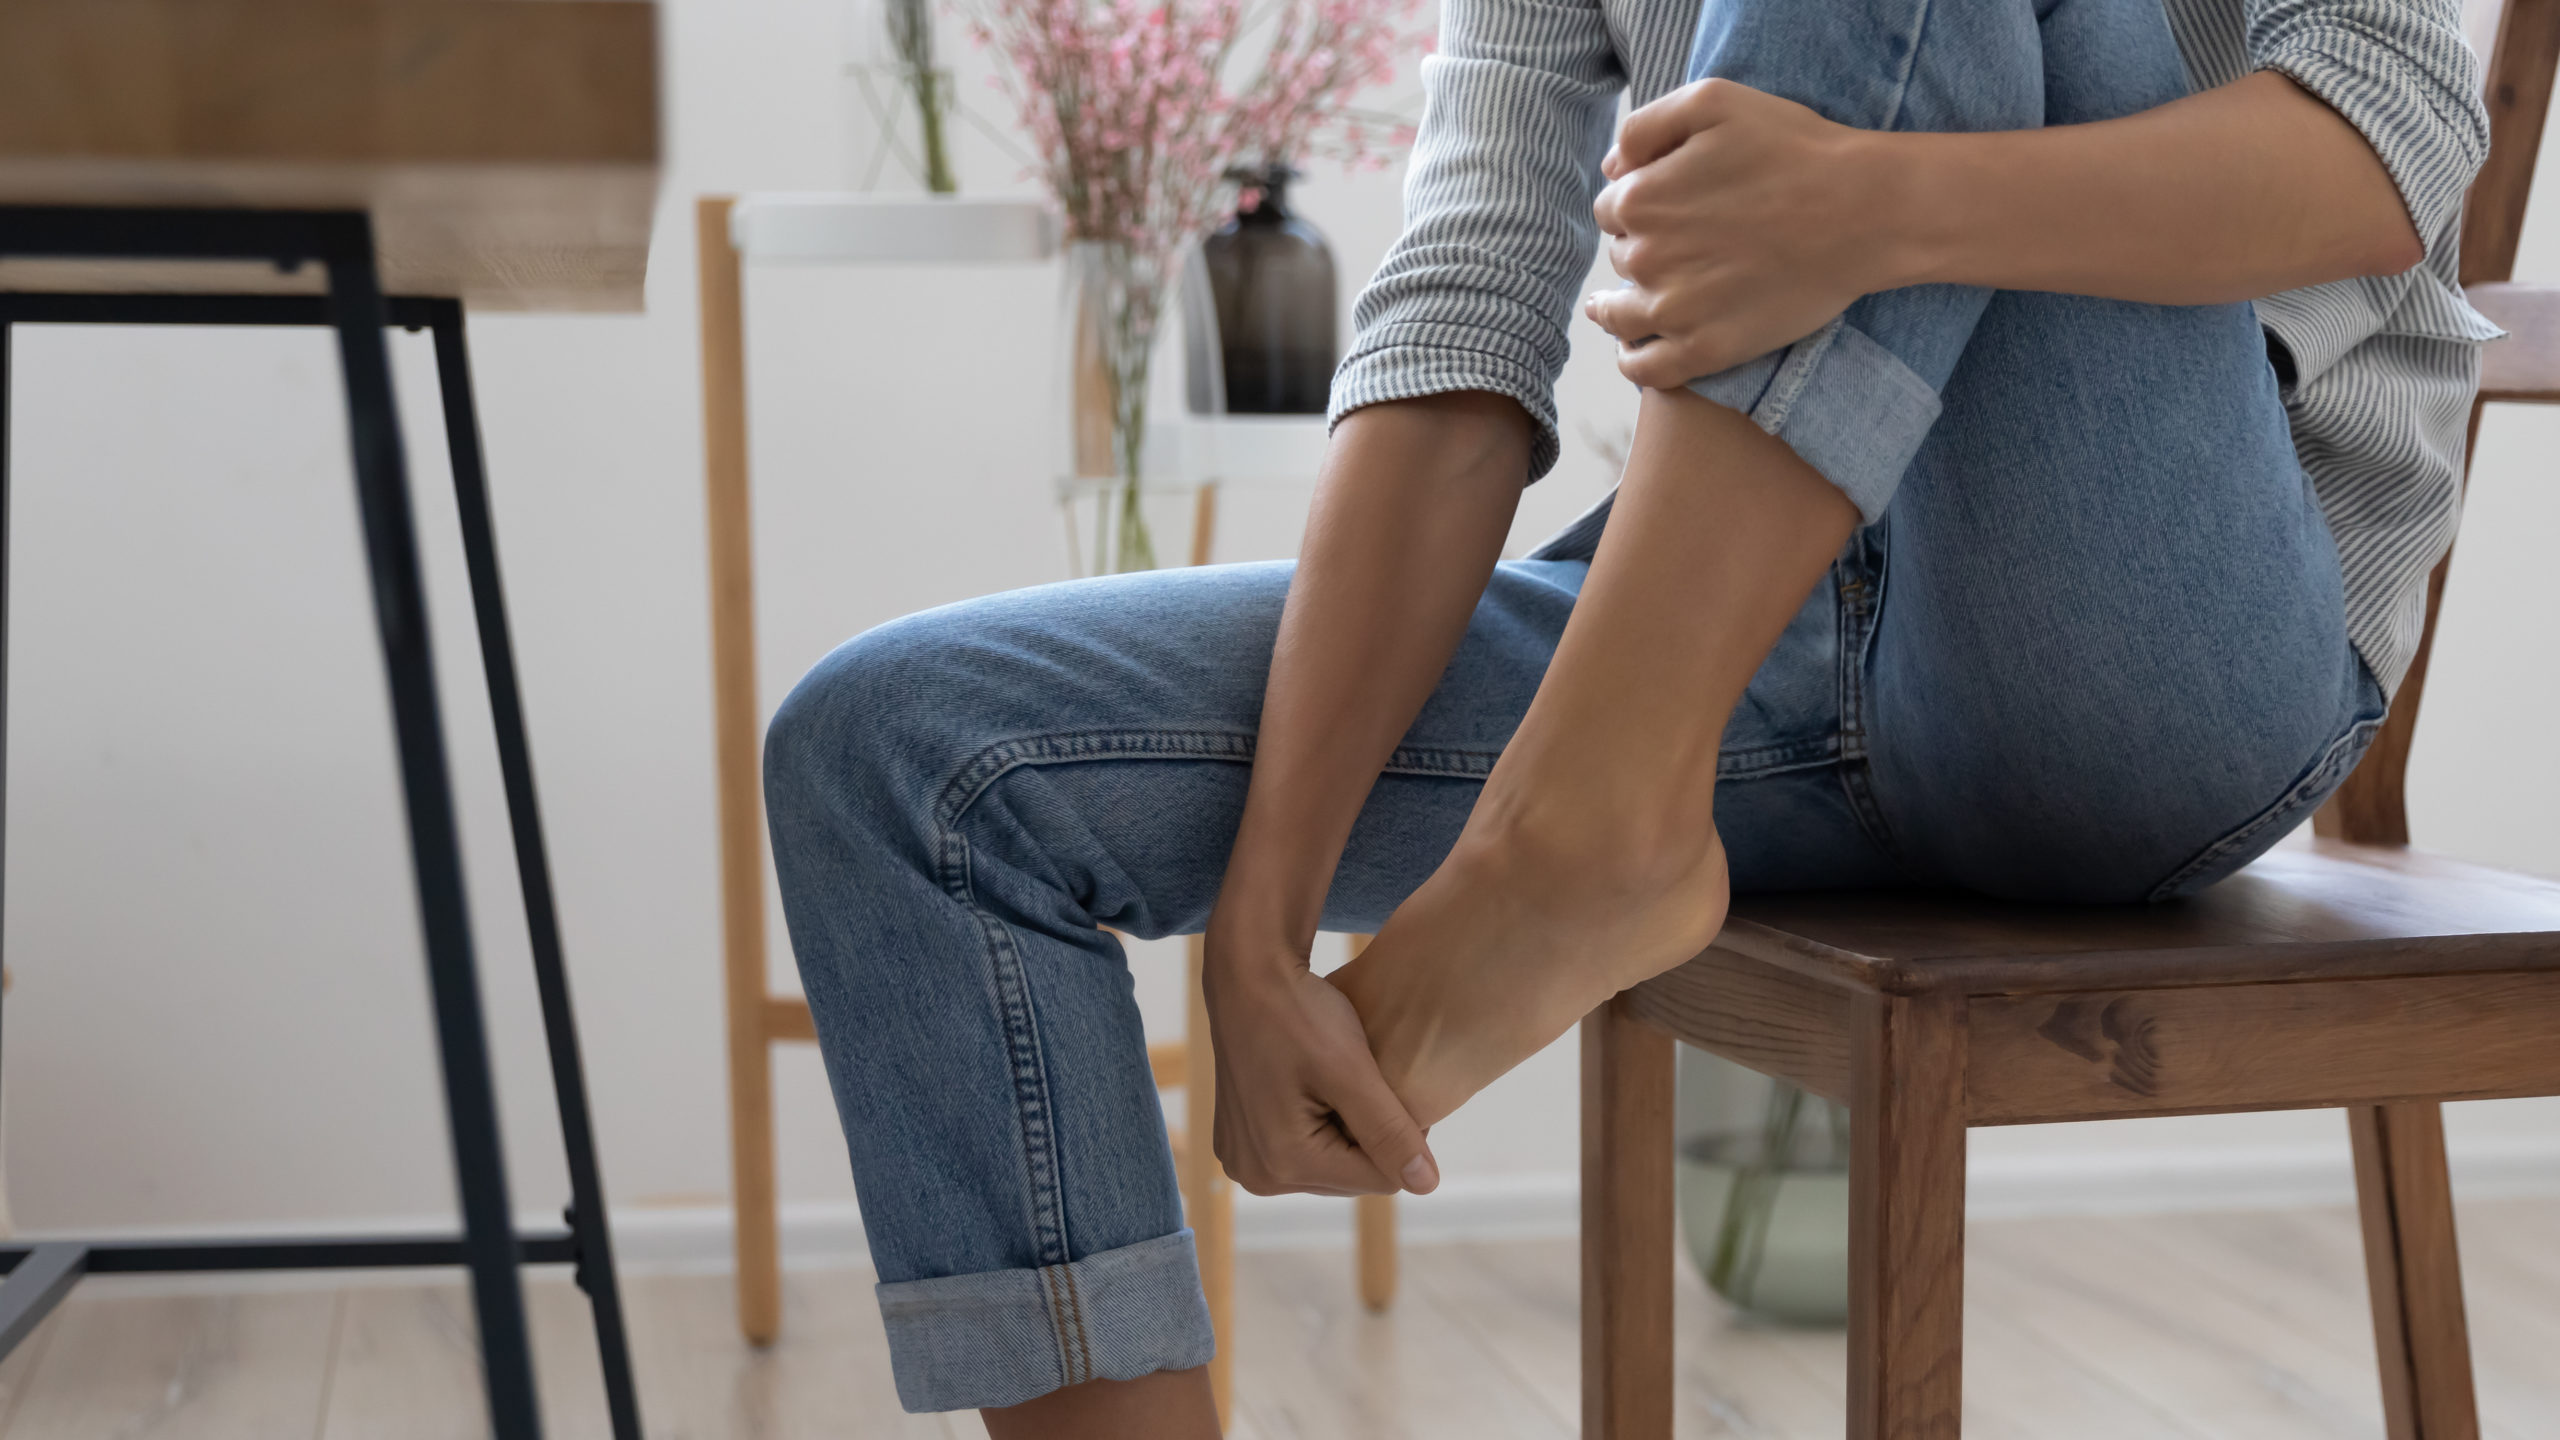 Foot Pain May Be a Common but Overlooked Rheumatoid Arthritis Symptom